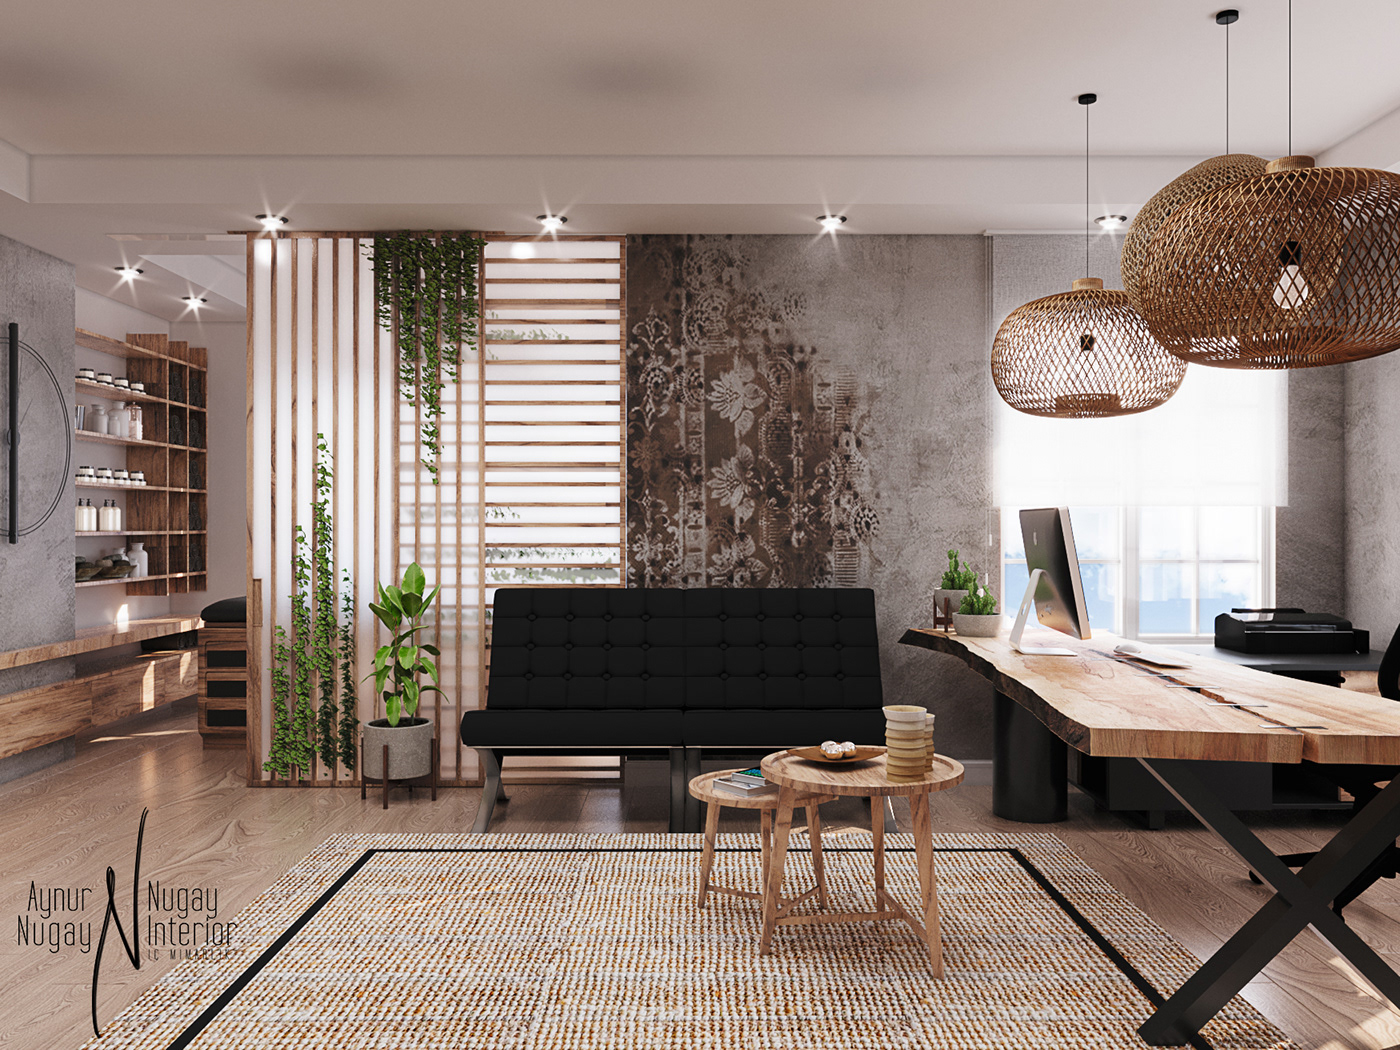 3dsmax corona render  interior design  Office officedesign phsiotherapy Pilates sports studio thetahealing 